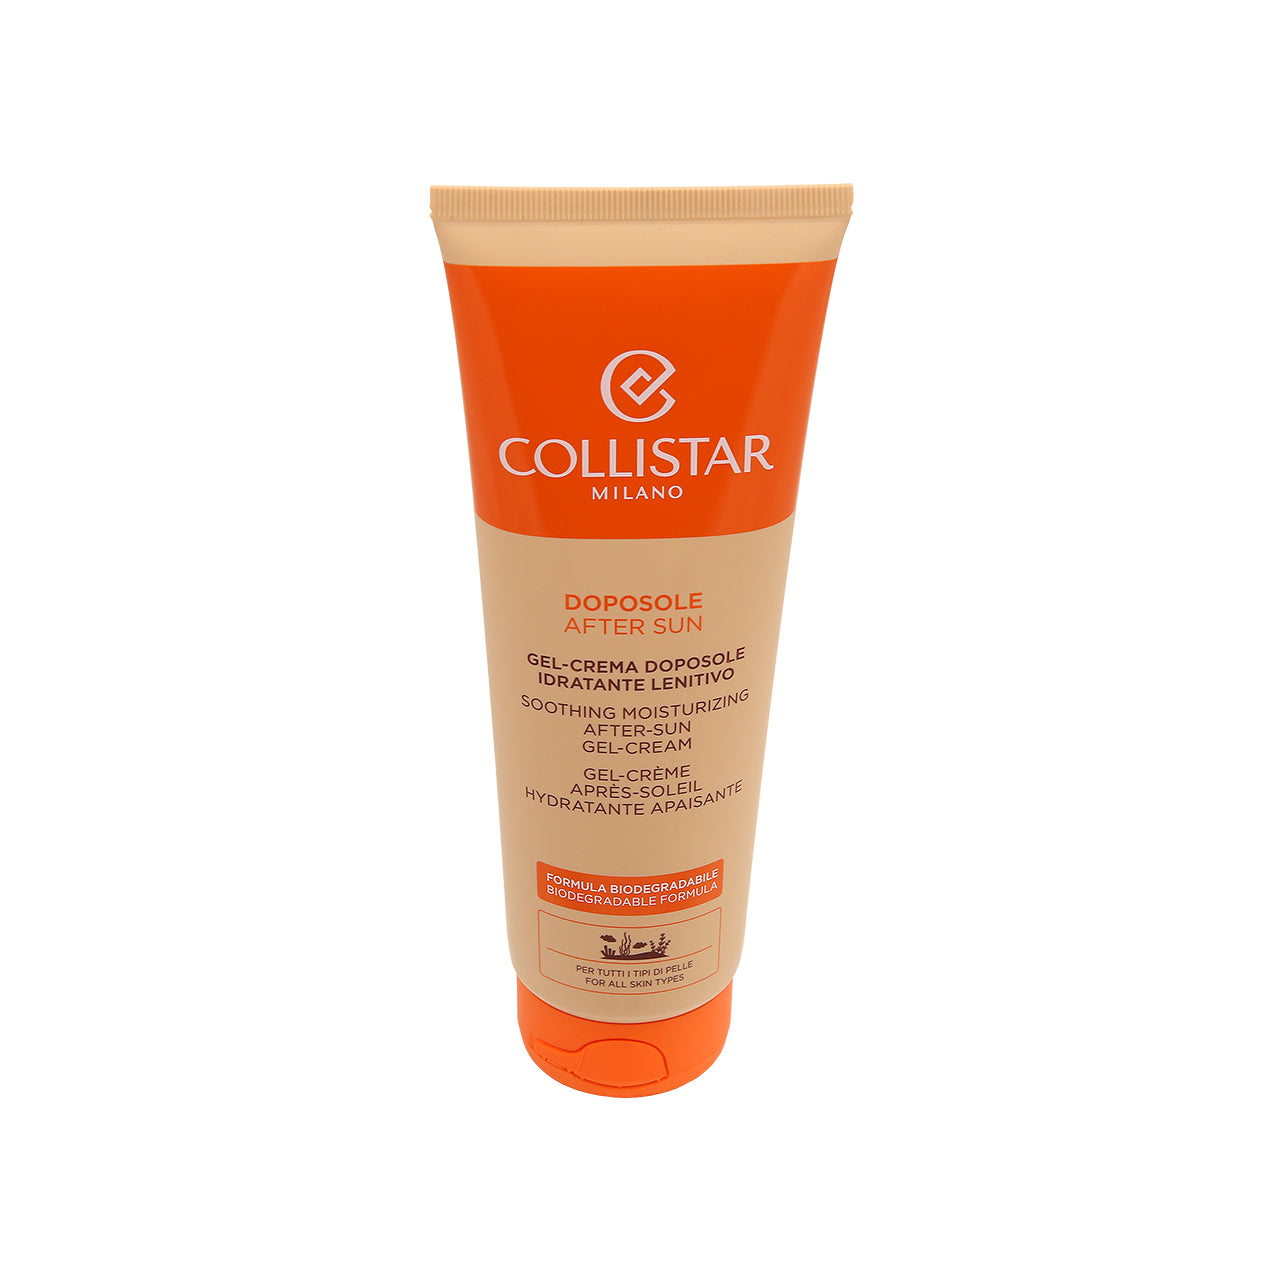 Collistar Soothing Moisturizing After-Sun Gel-Cream 250ml | Sasa Global eShop